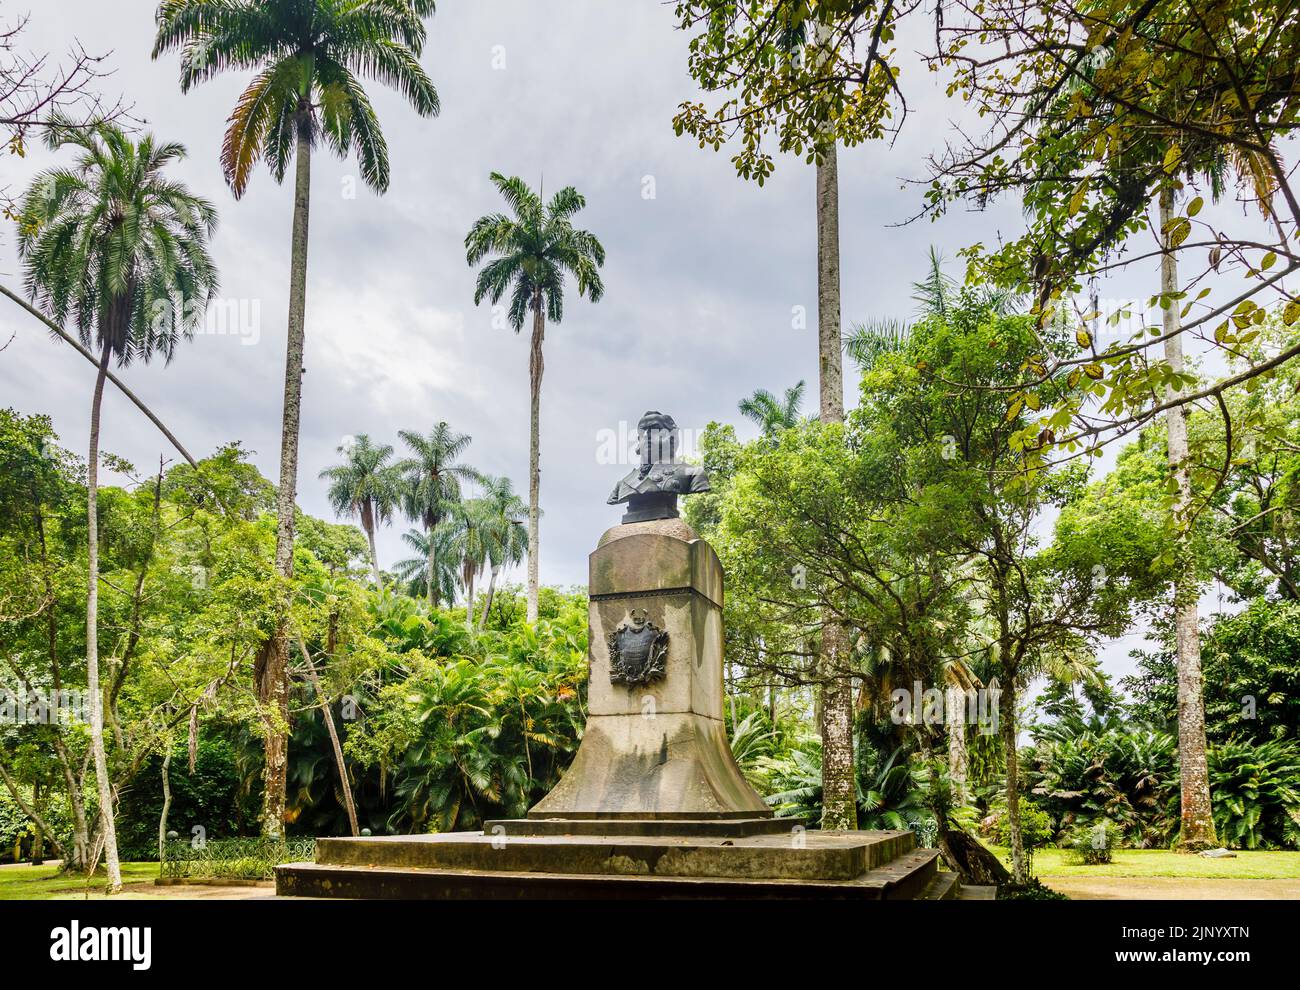 Bust and coat of arms of D Joao VI, founder of the Botanical Garden (Jardim Botanico), South Zone, Rio de Janeiro, Brazil, amongst tropical palm trees Stock Photo